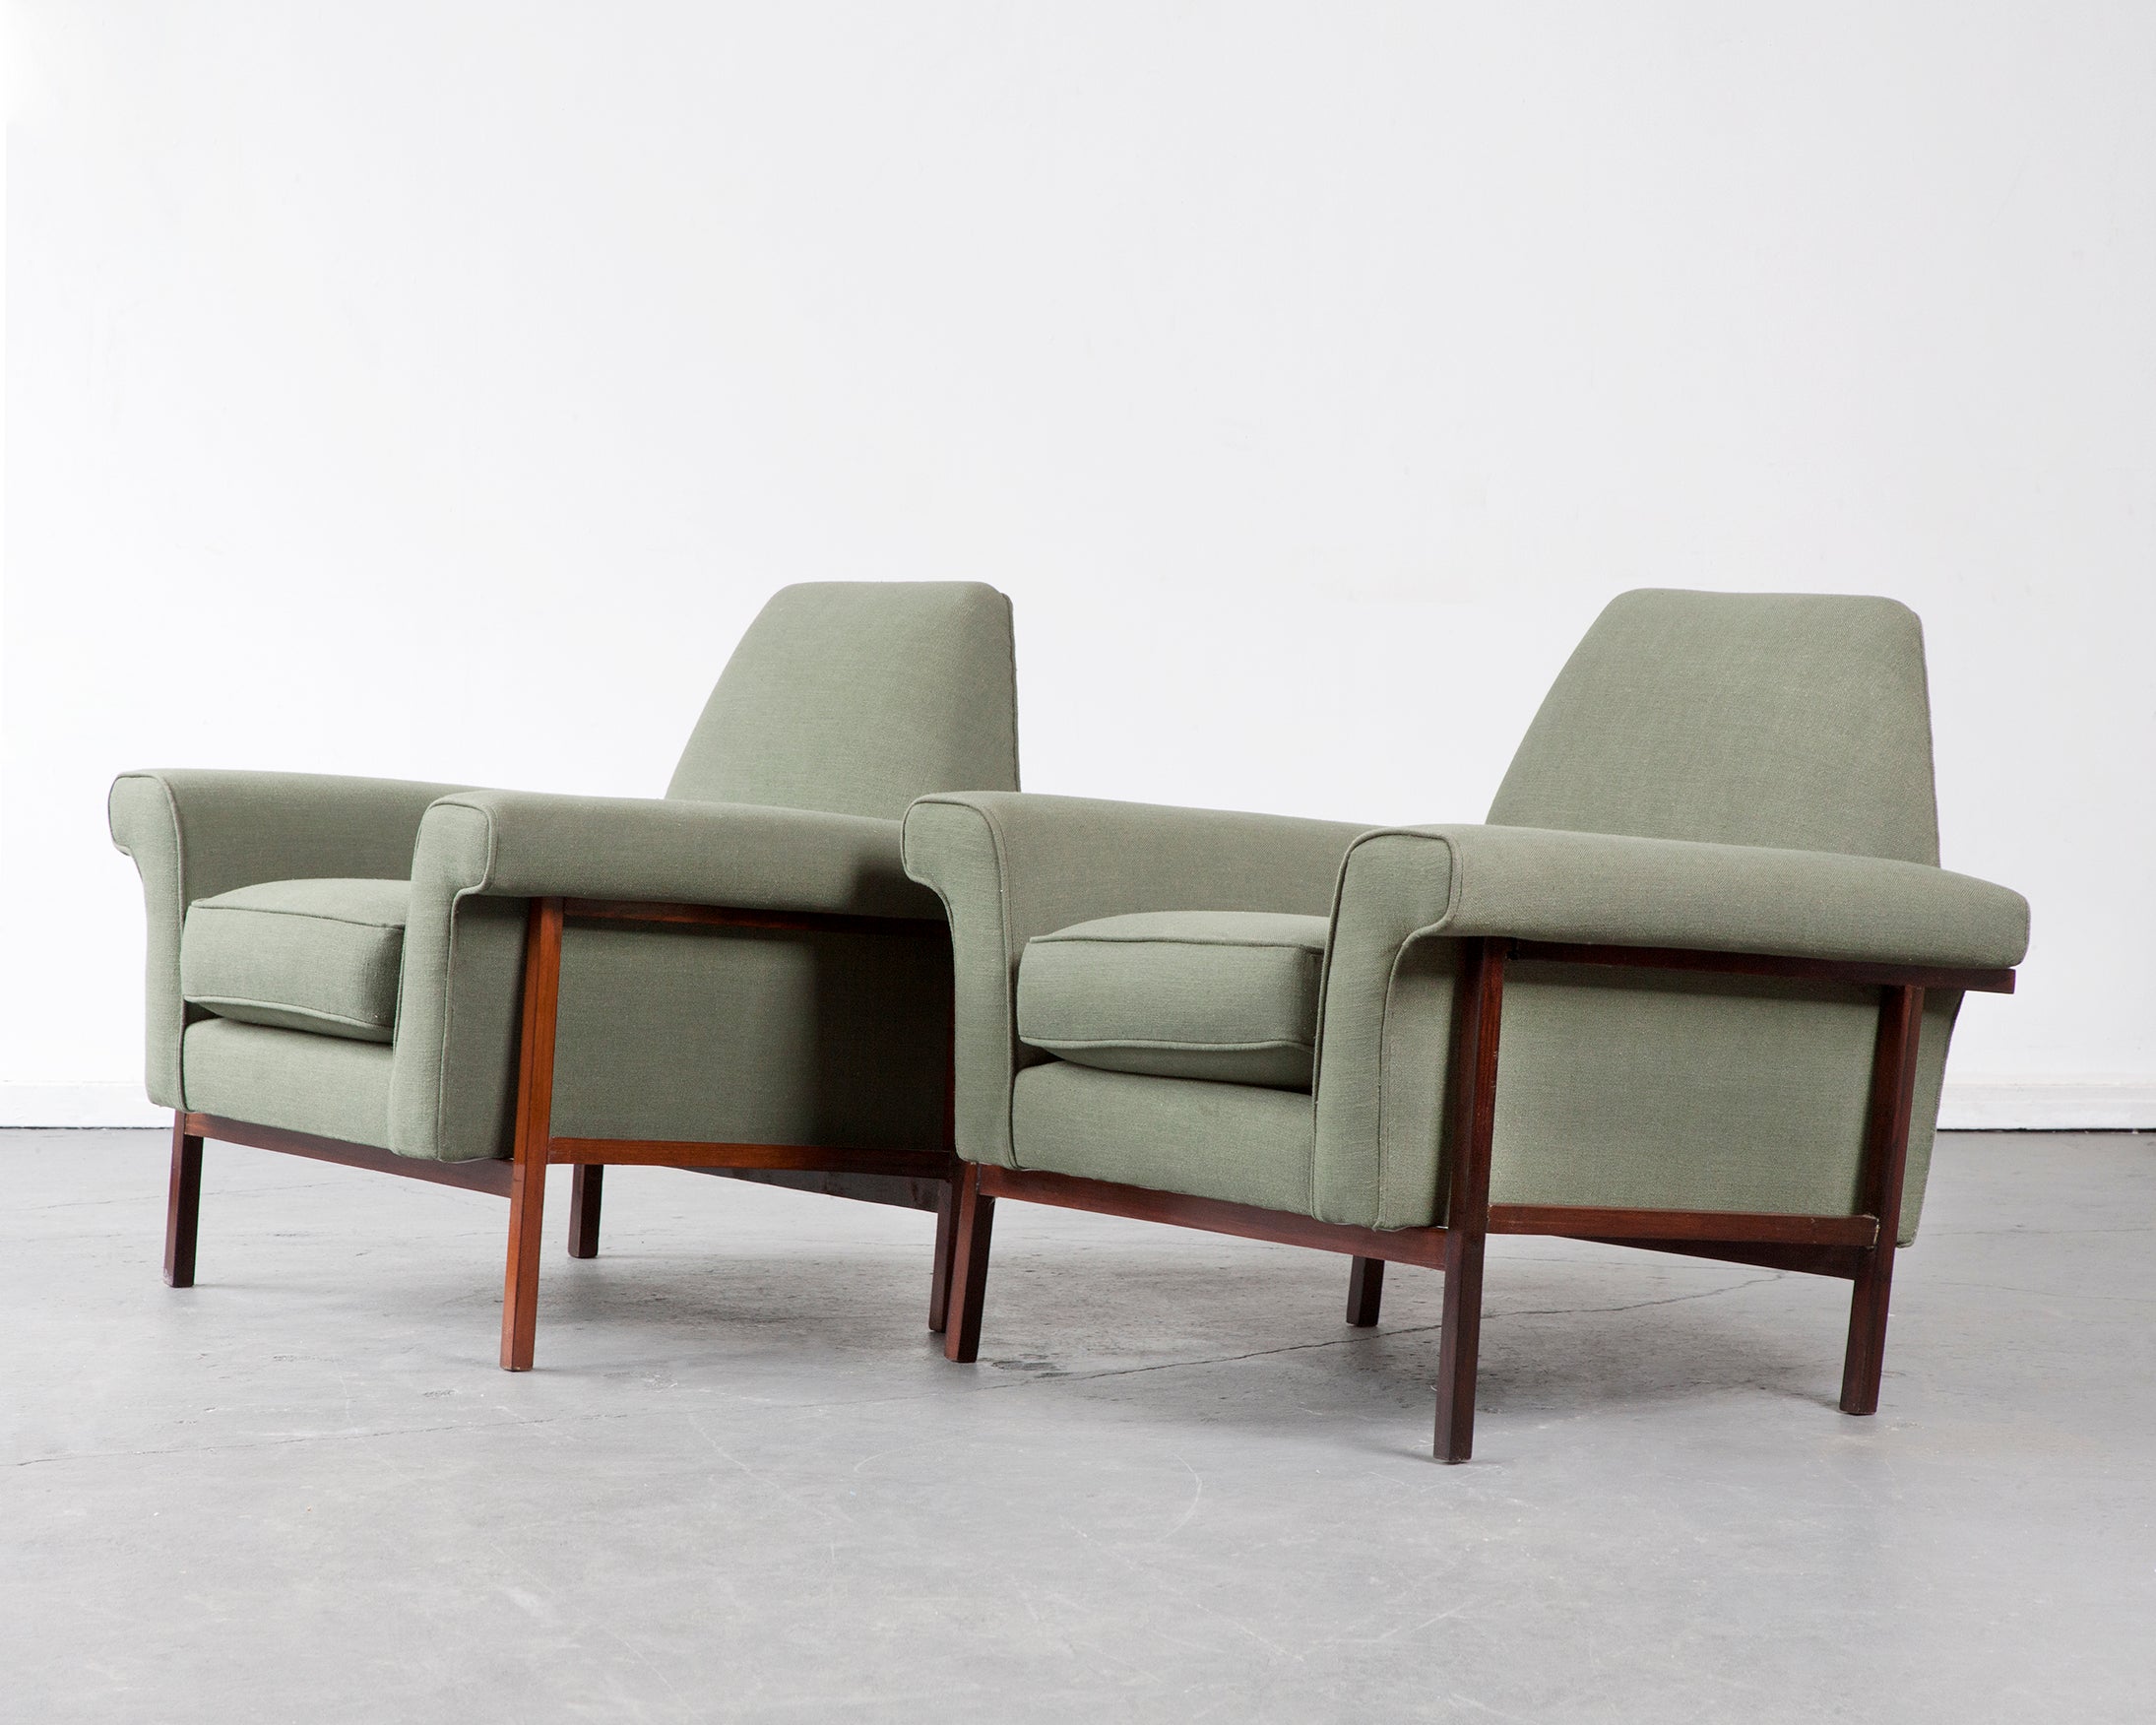 Lounge chairs by Branco & Preto